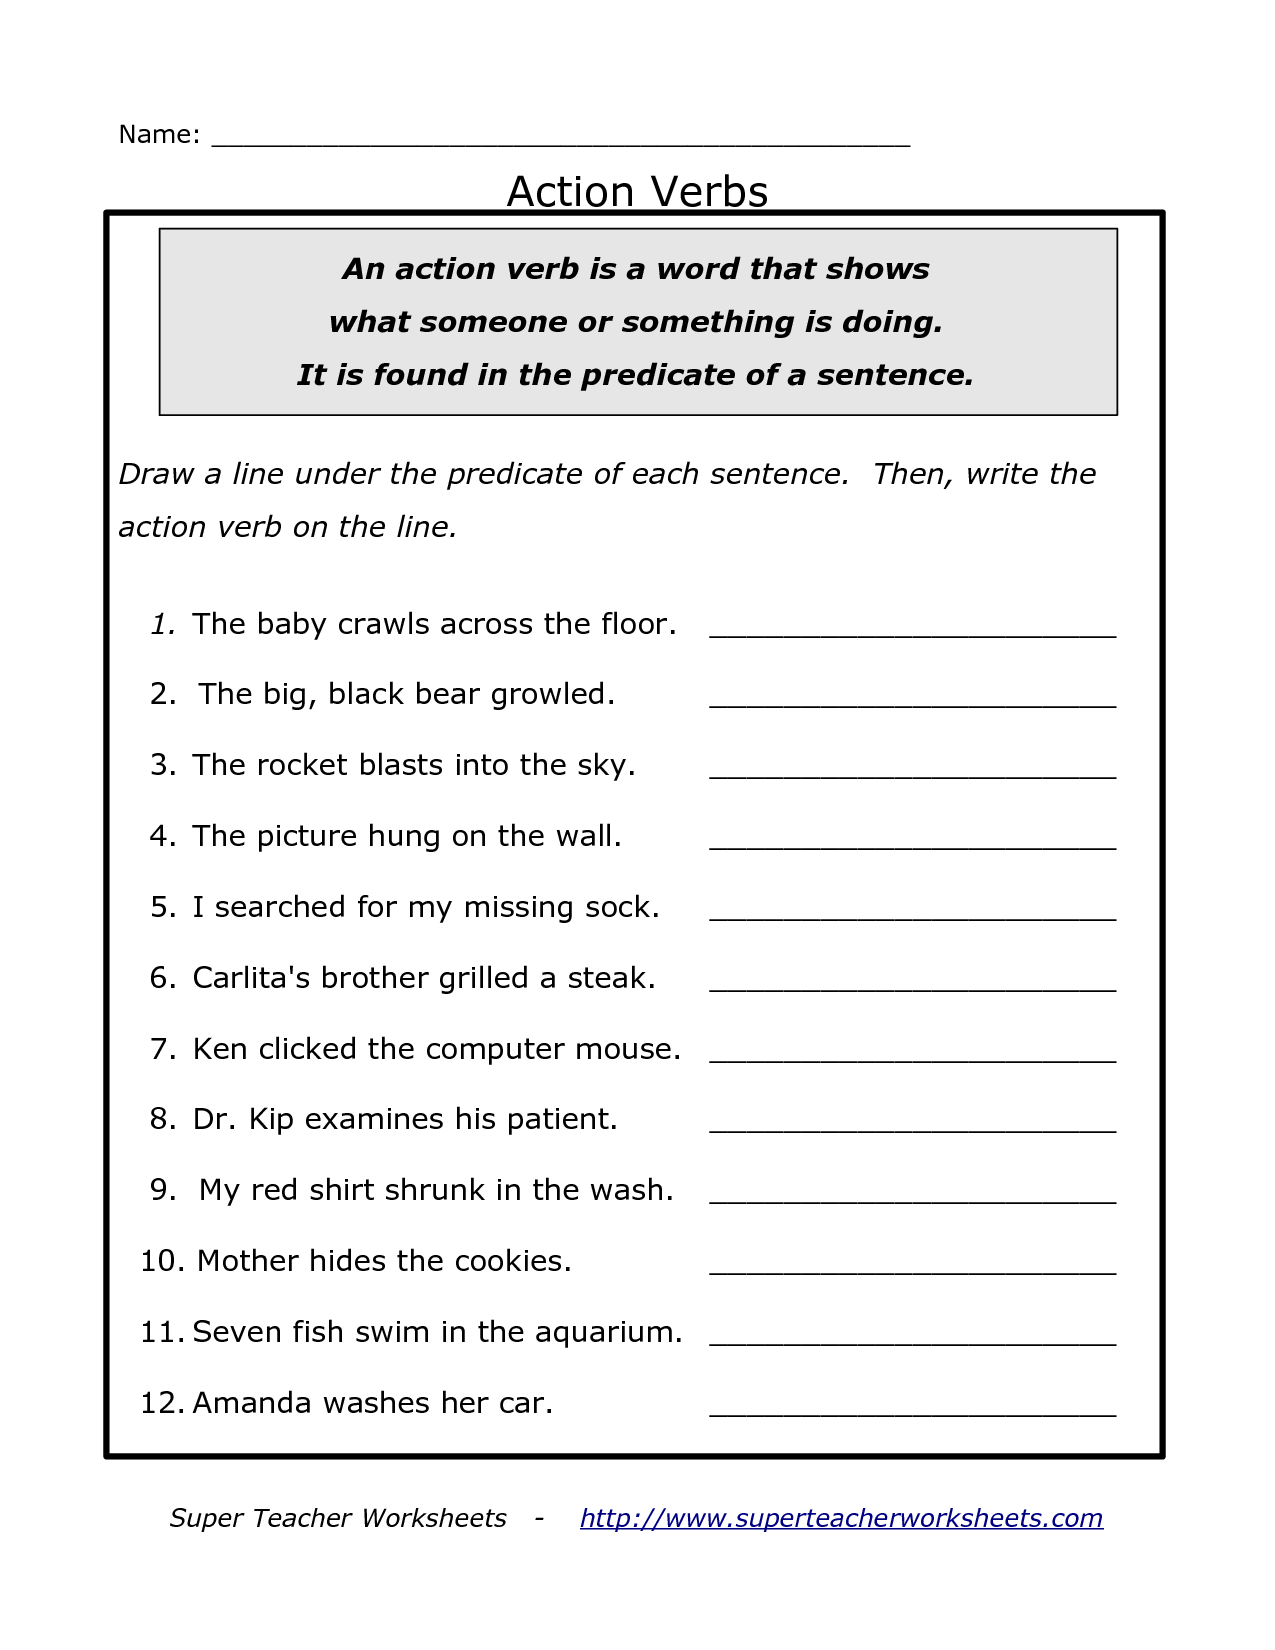 Free Action Verb Worksheets 2nd Grade